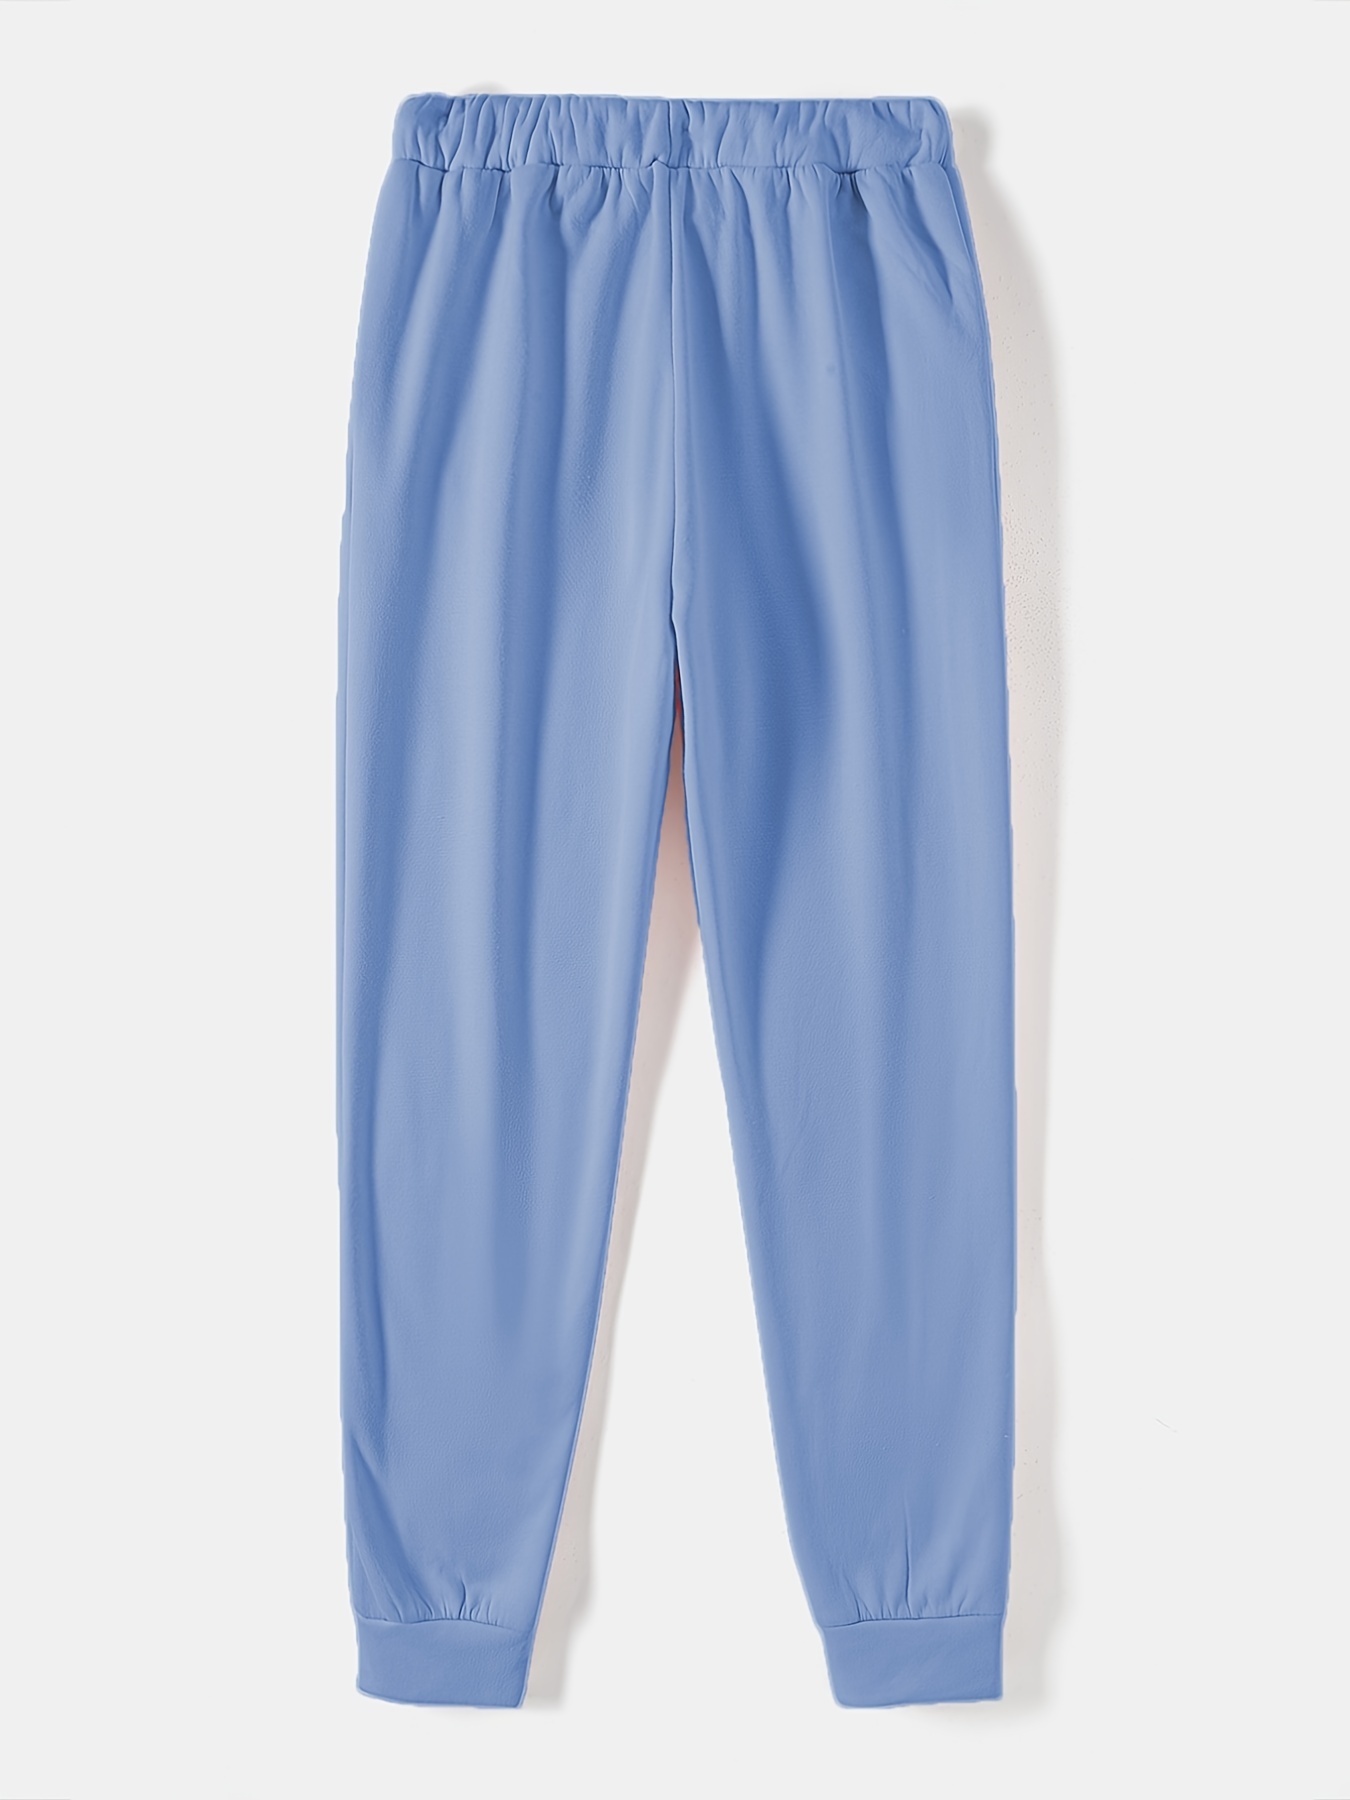 solid drawstring thermal sweatpants versatile loose comfy jogger pants womens clothing details 38